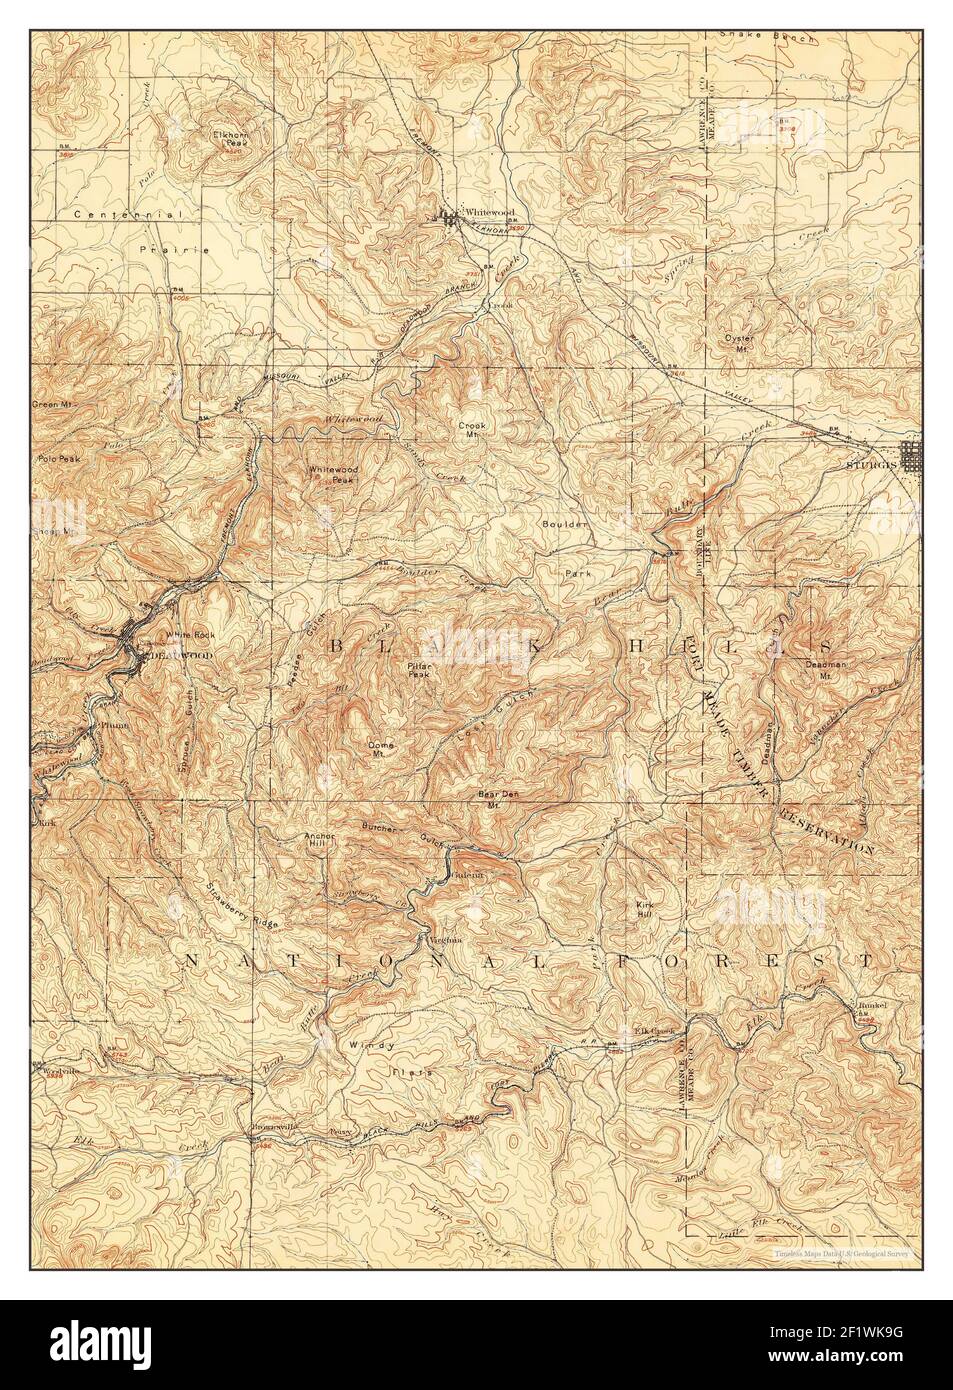 Sturgis South Dakota Map 1899 162500 United States Of America By Timeless Maps Data Us Geological Survey 2F1WK9G 